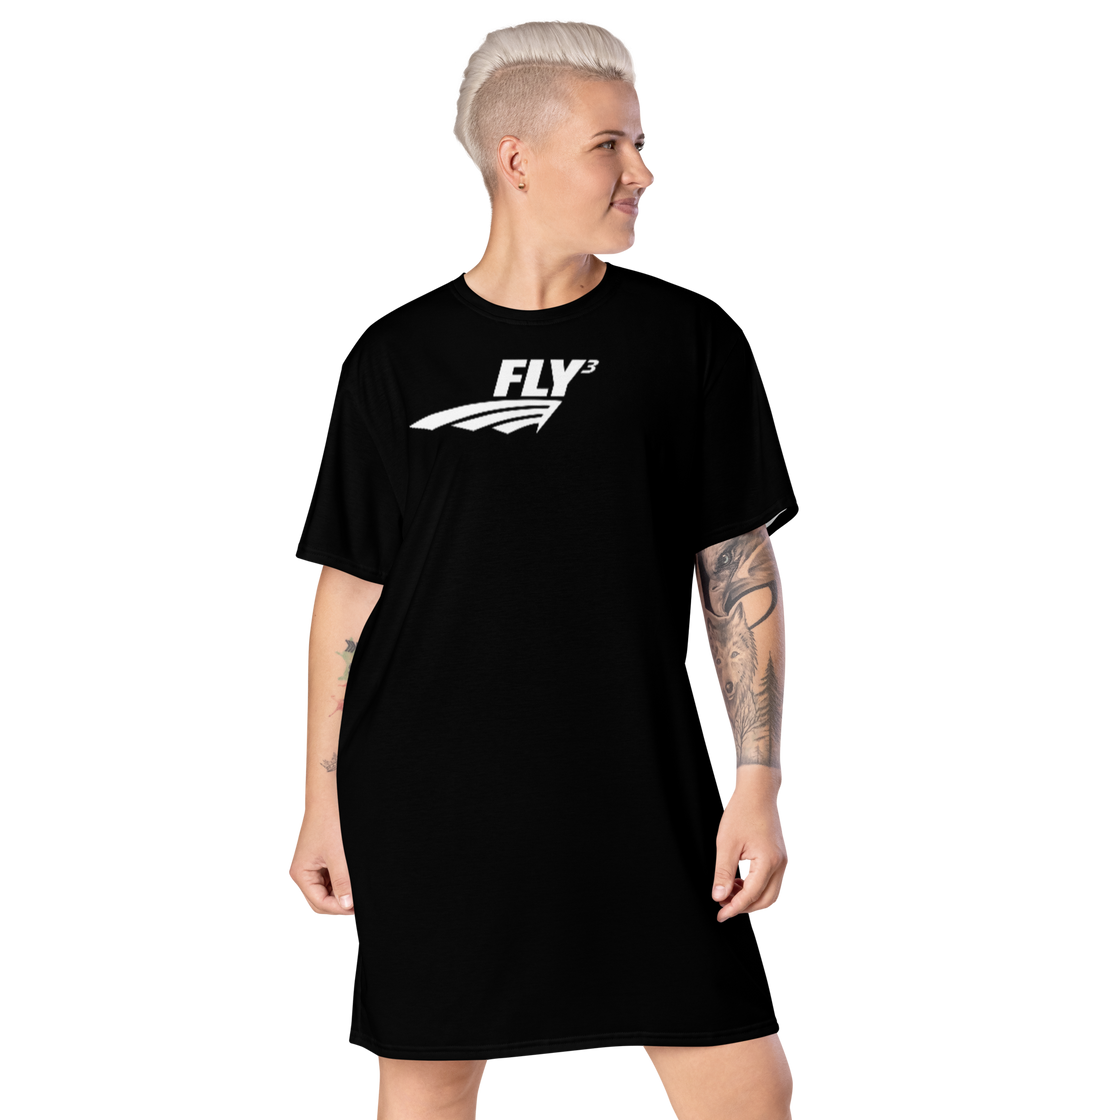 FLY³ T-shirt dress | Flycube